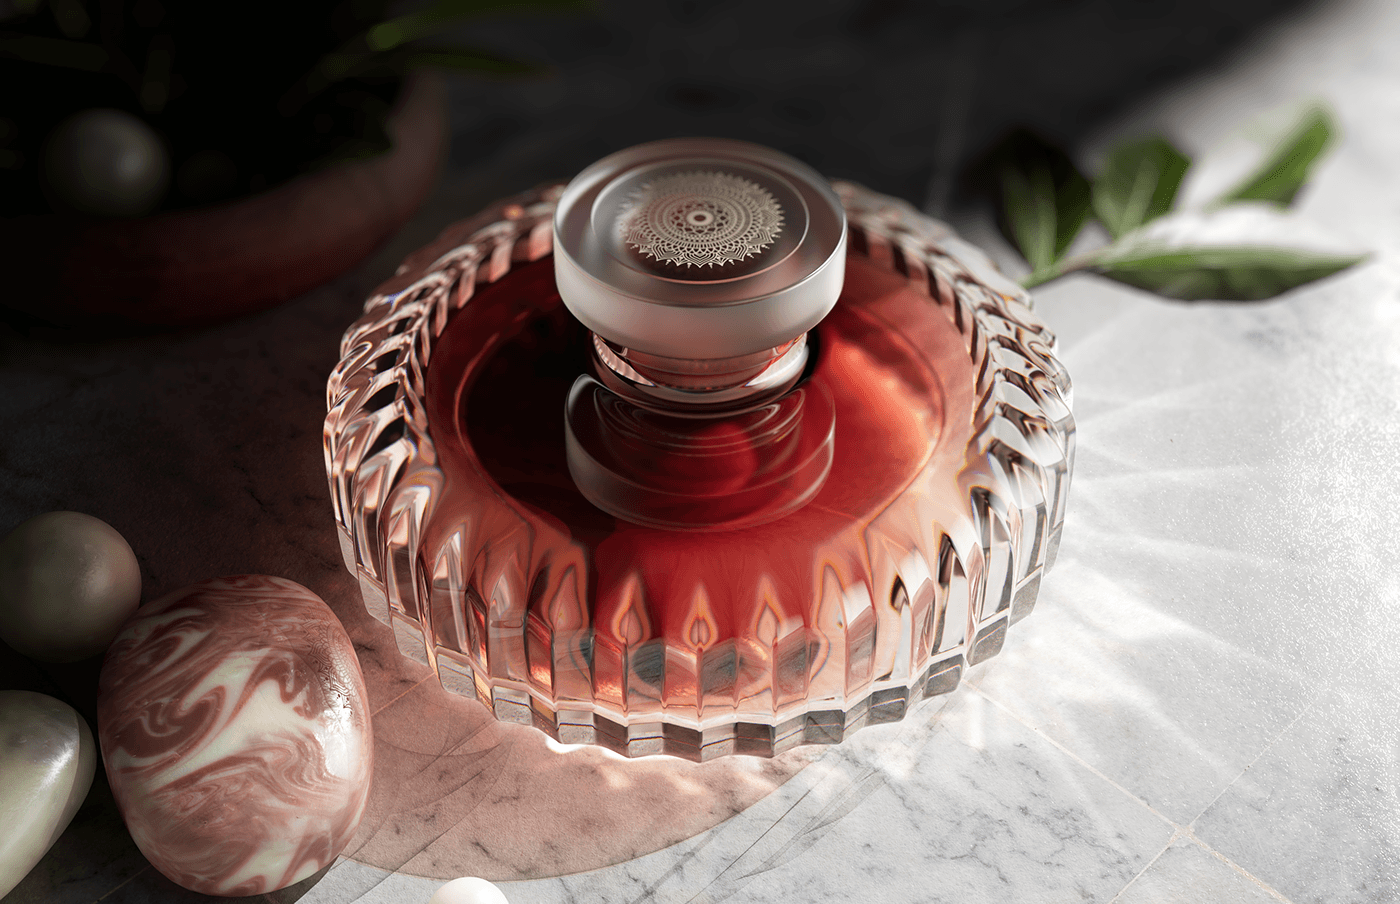 perfume parfum glass luxury caustics Liquid visualisation liquor Cognac wine